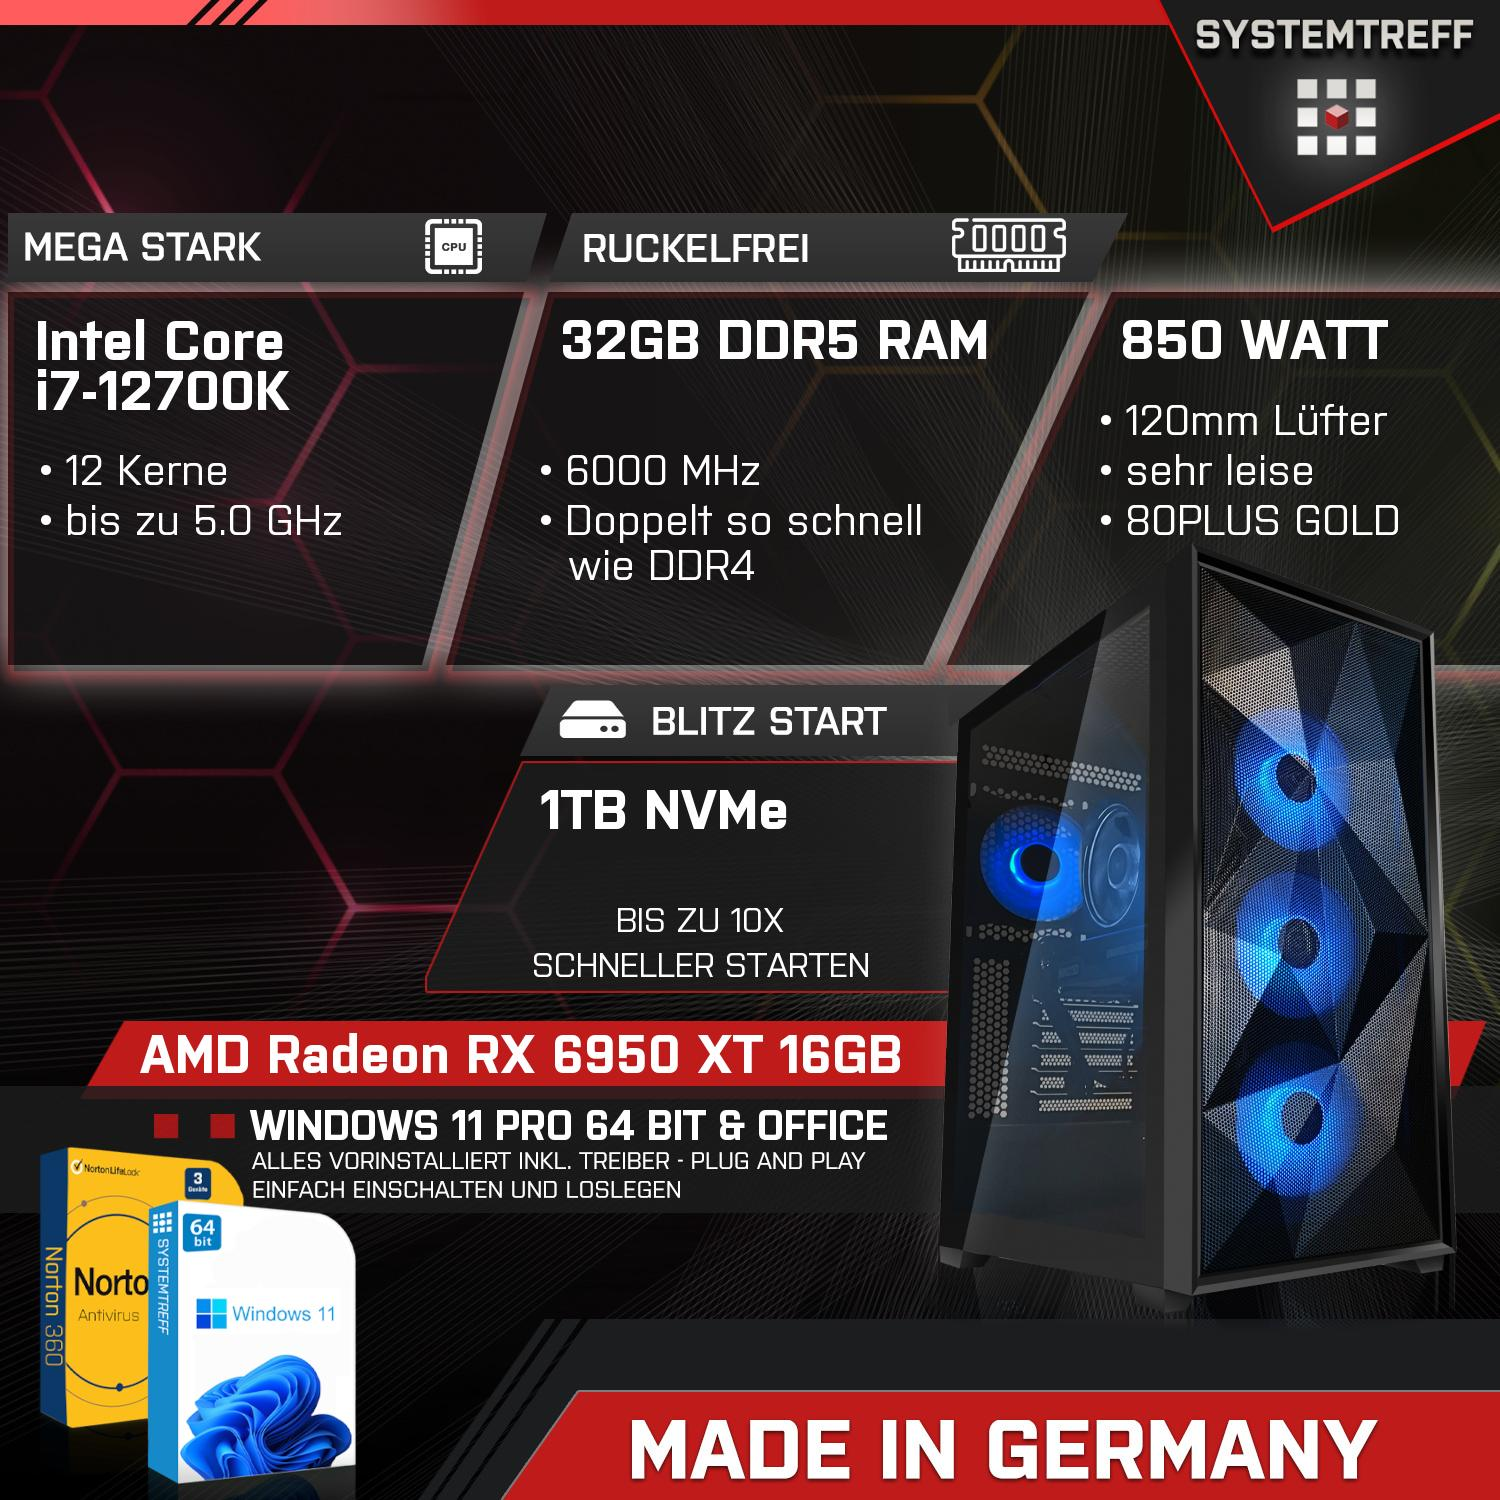 SYSTEMTREFF High-End Gaming Intel Gaming XT 11 RAM, AMD GB mit Windows mSSD, i7 1000 Core RX Radeon™ PC 6950 Pro, i7-12700K, Prozessor, Intel® 32 Core™ GB